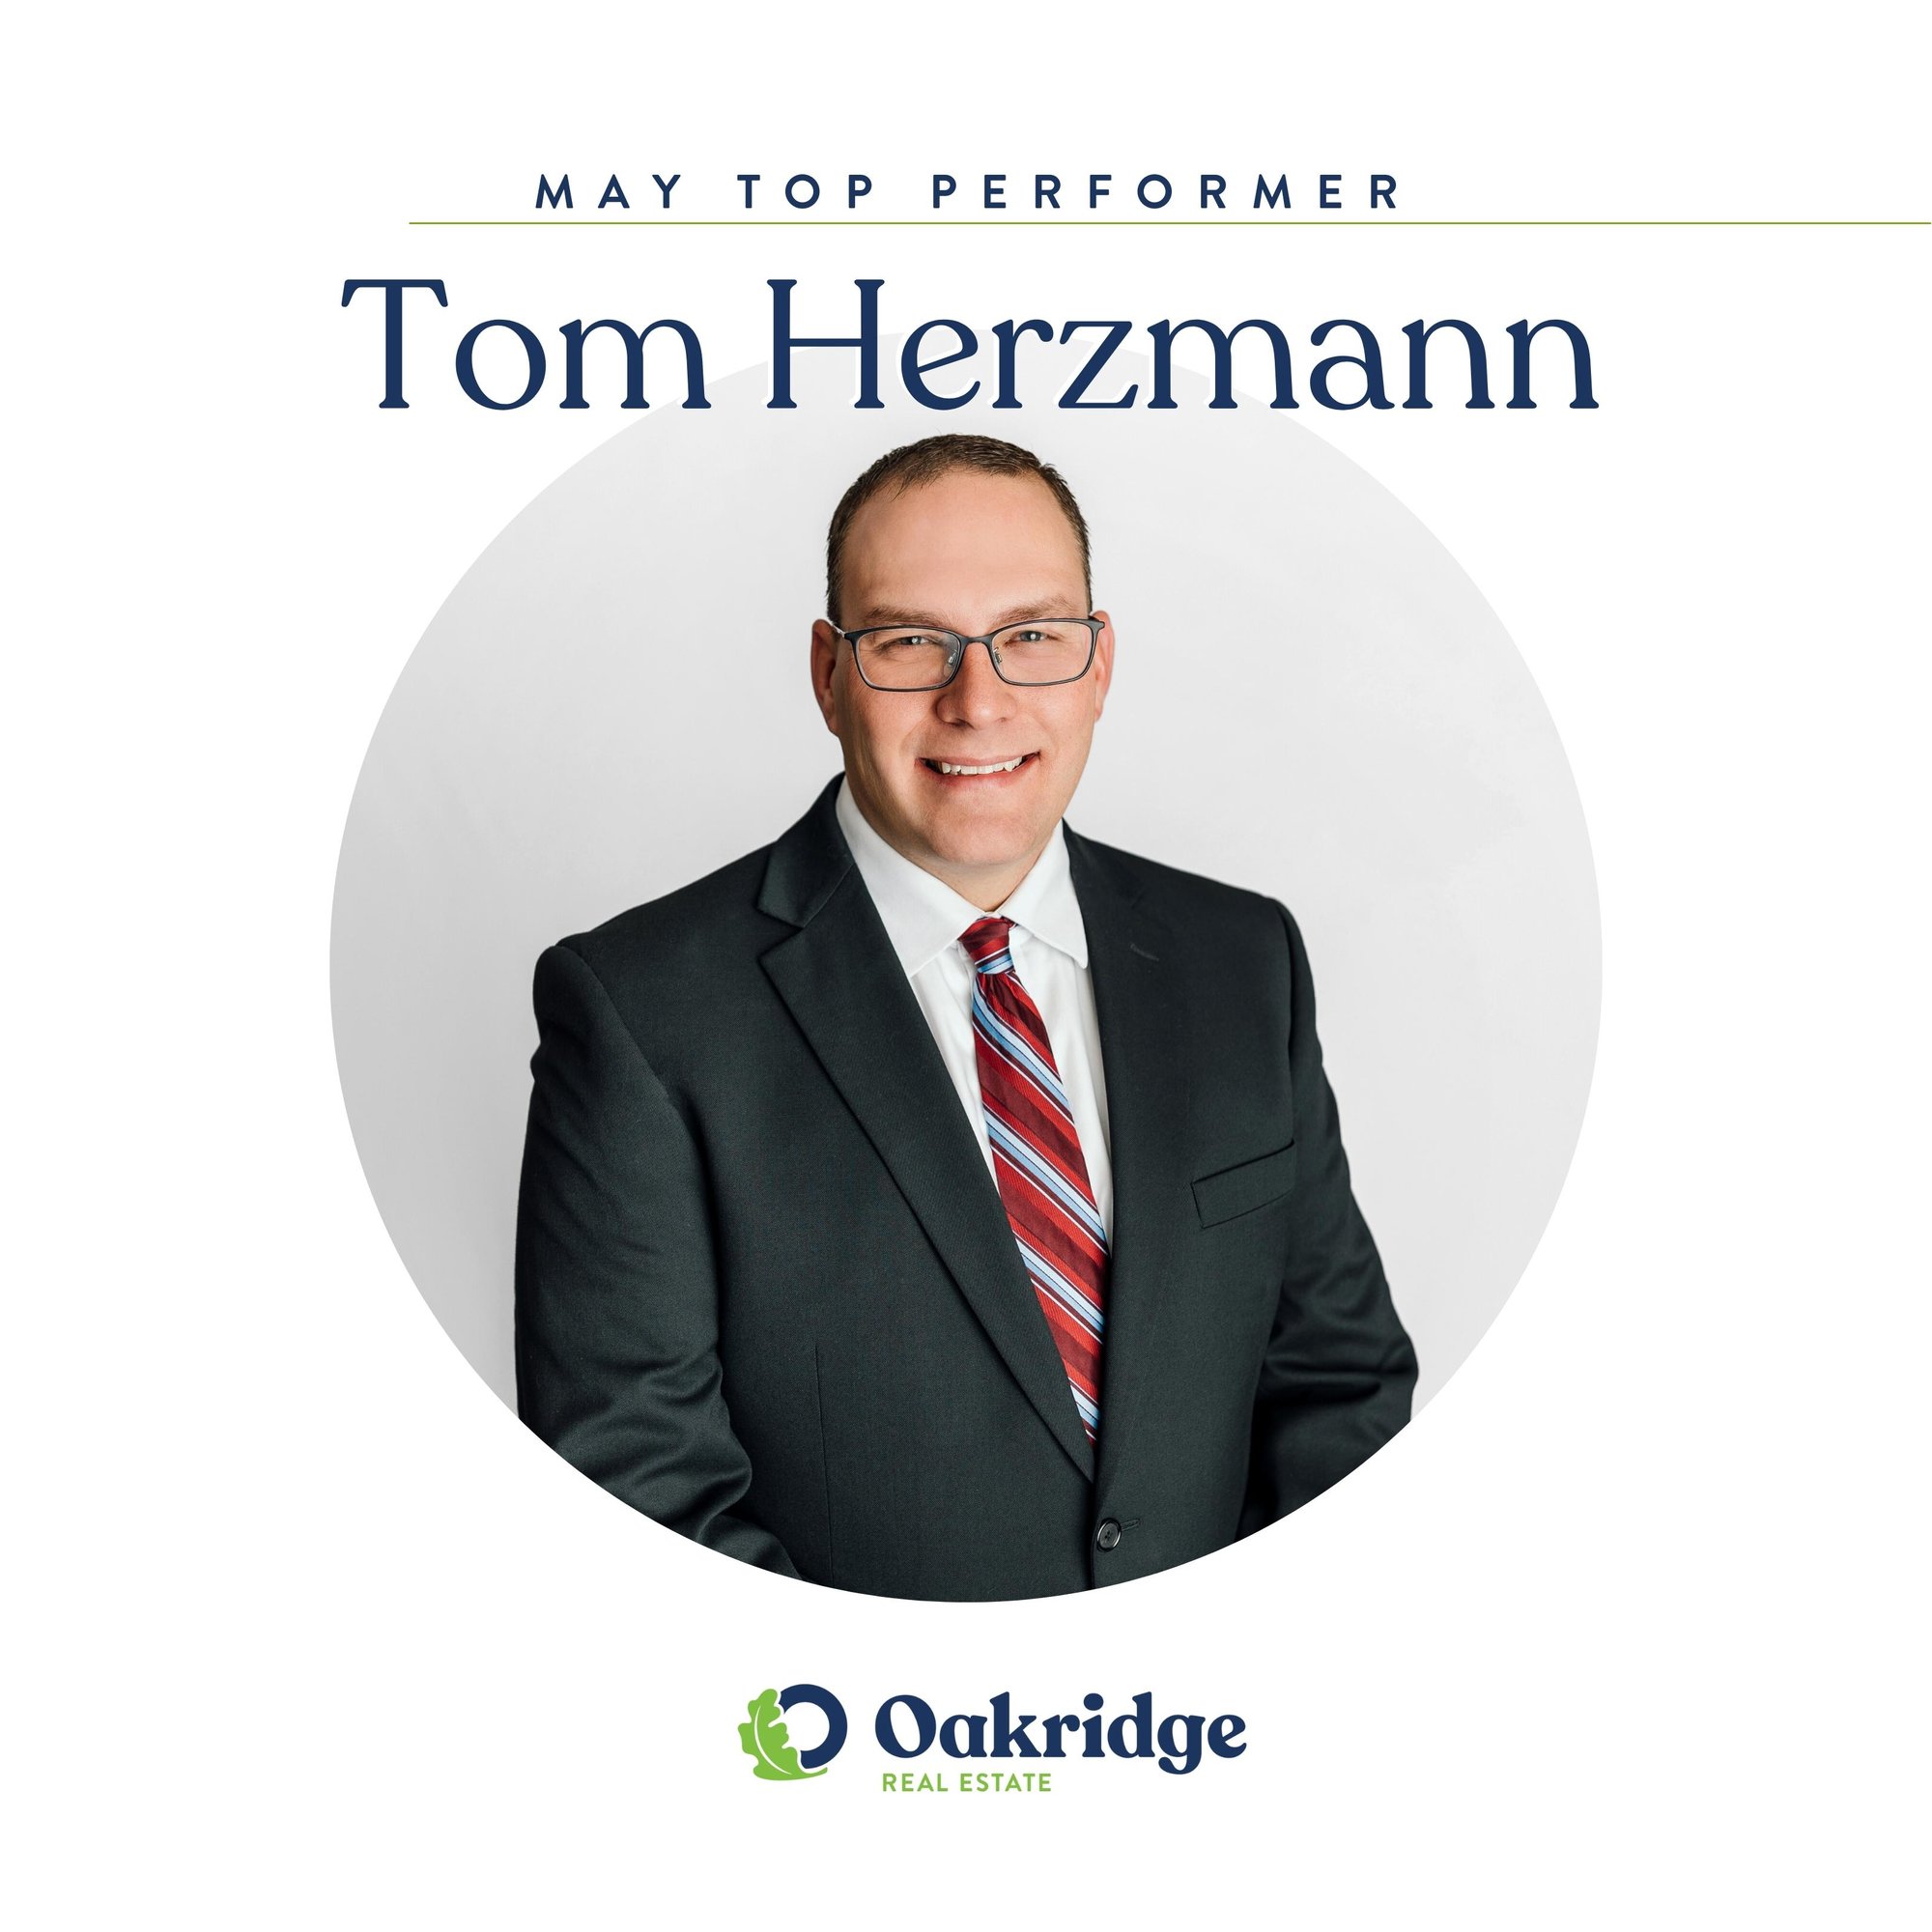 Tom Herzmann May Top Performer Oakridge Real Estate